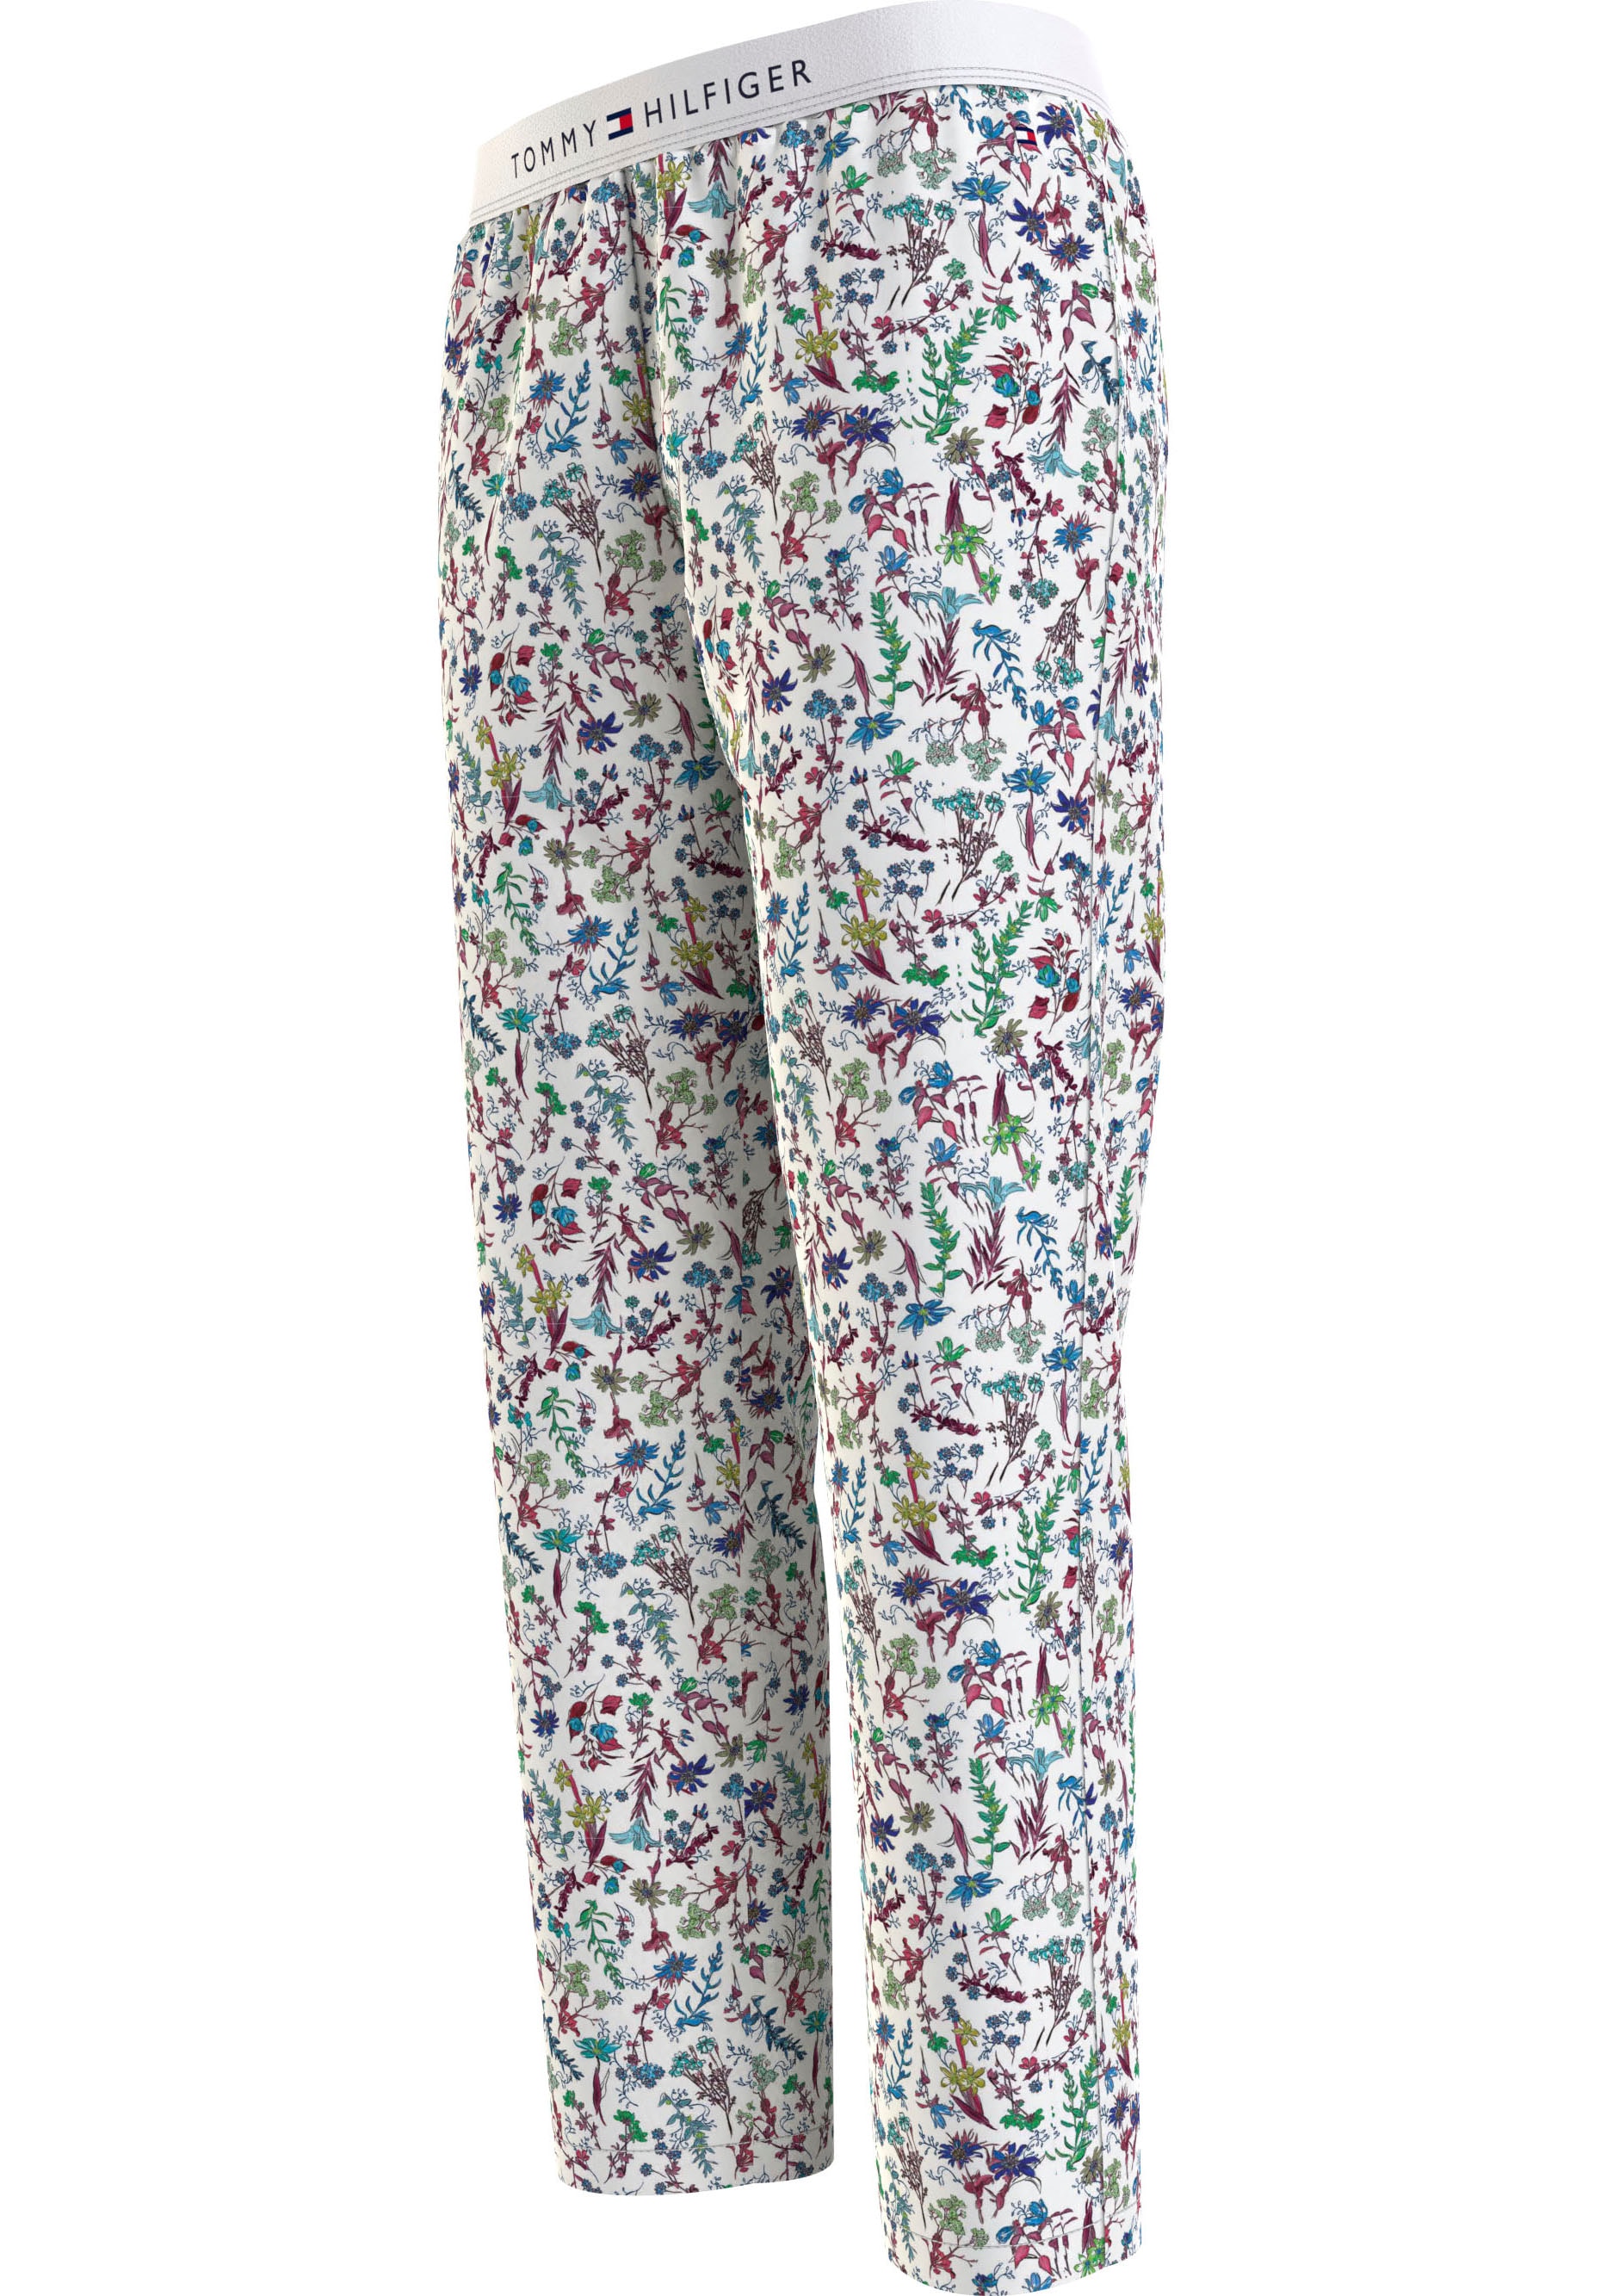 »TH Schlafhose Muster bei floralem in bestellen Hilfiger Tommy Underwear OTTO WOVEN PANTS«, farbefrohem